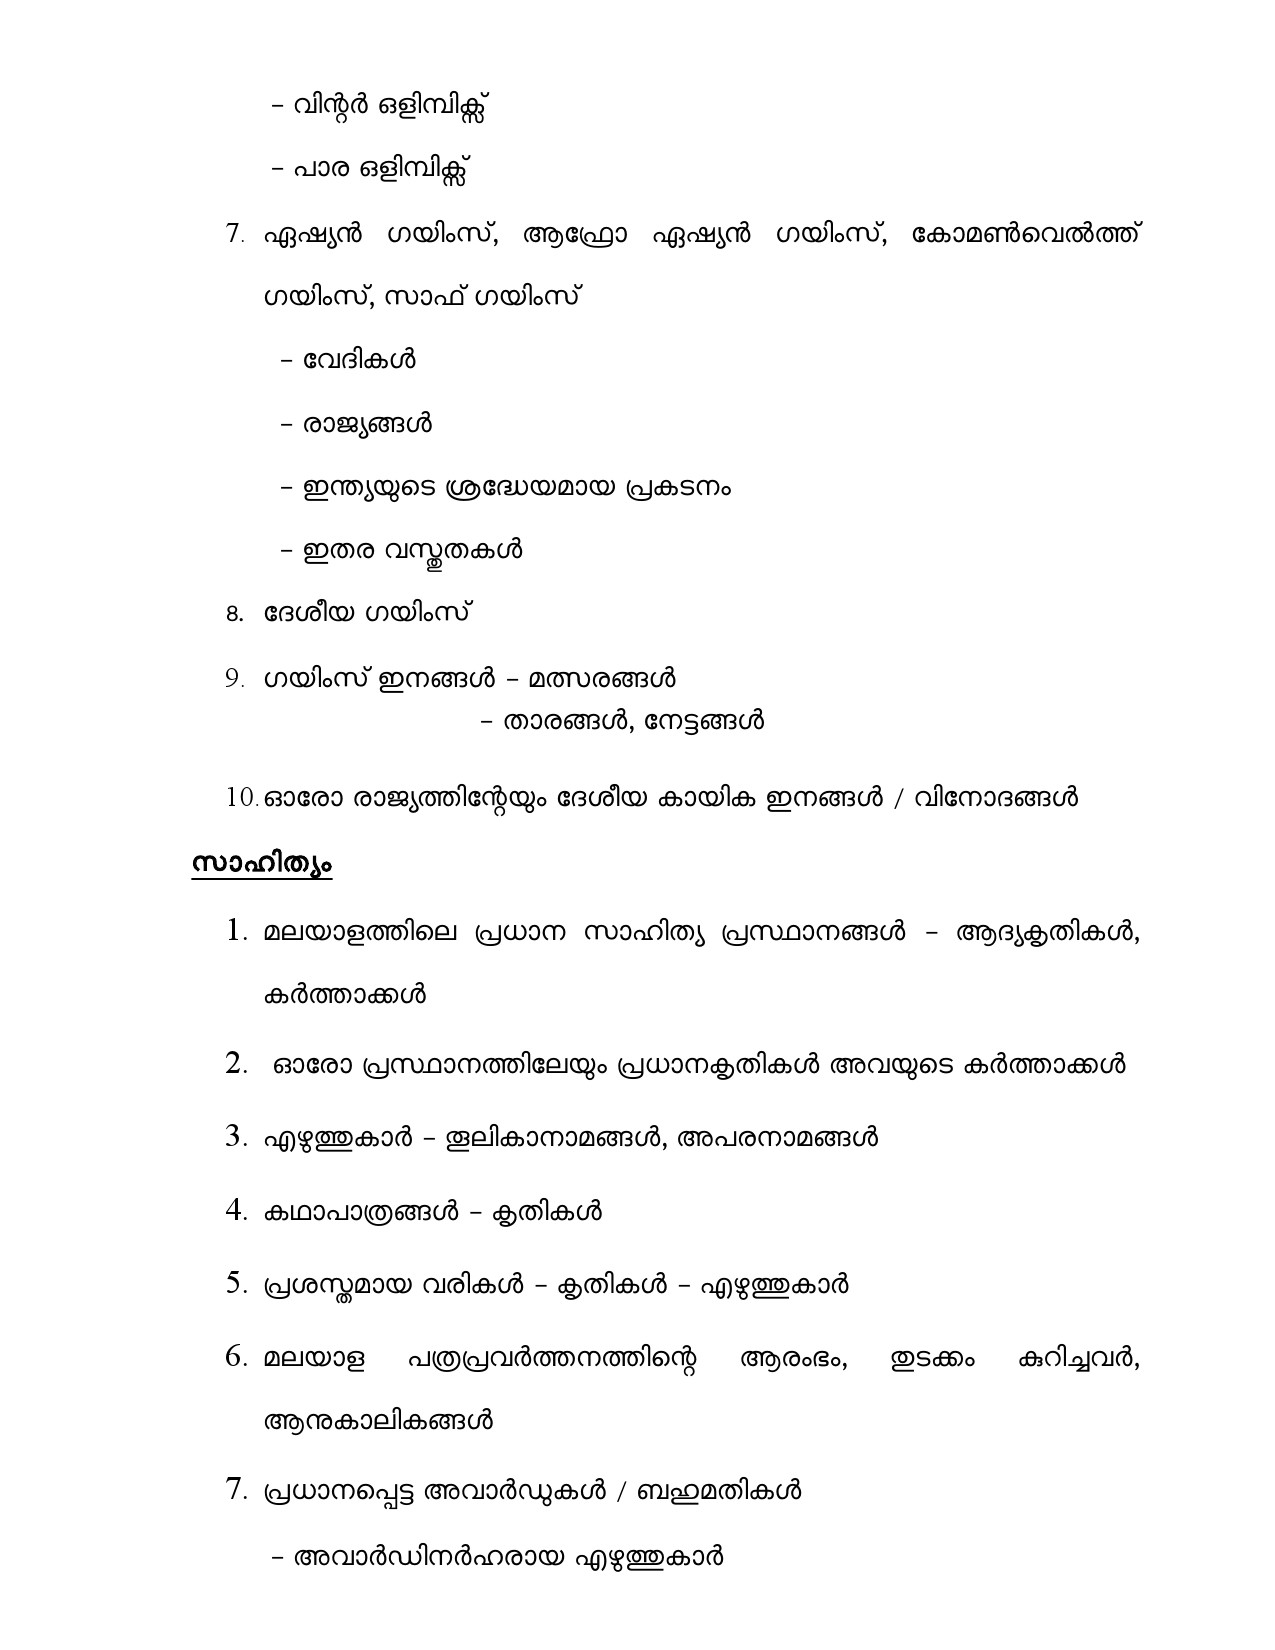 LDC Main Exam Syllabus Malayalam And English - Notification Image 7